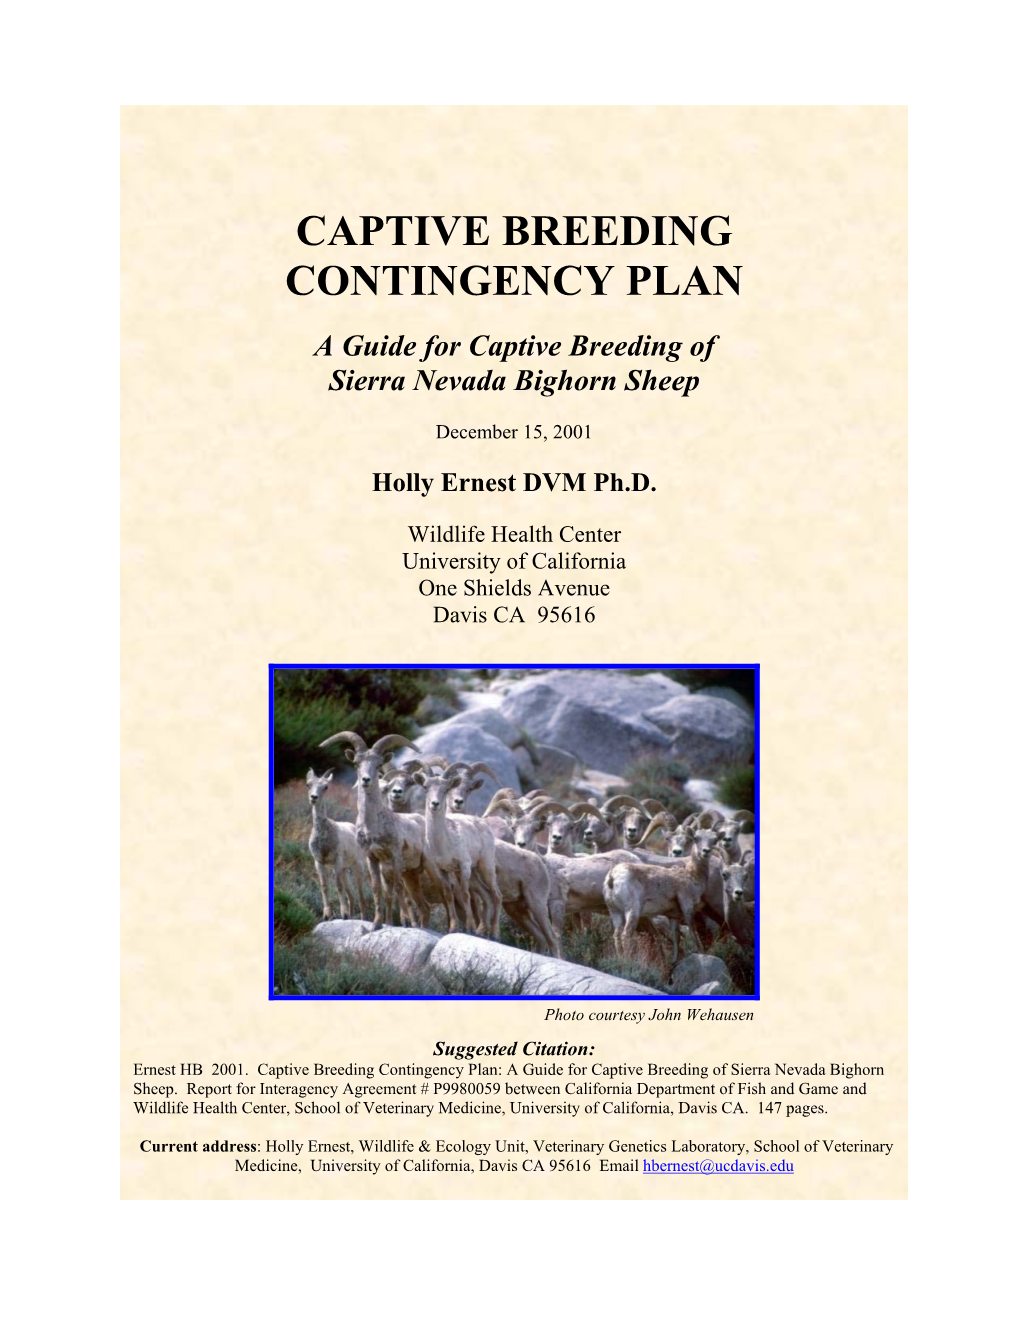 A Guide for Captive Breeding of Sierra Nevada Bighorn Sheep